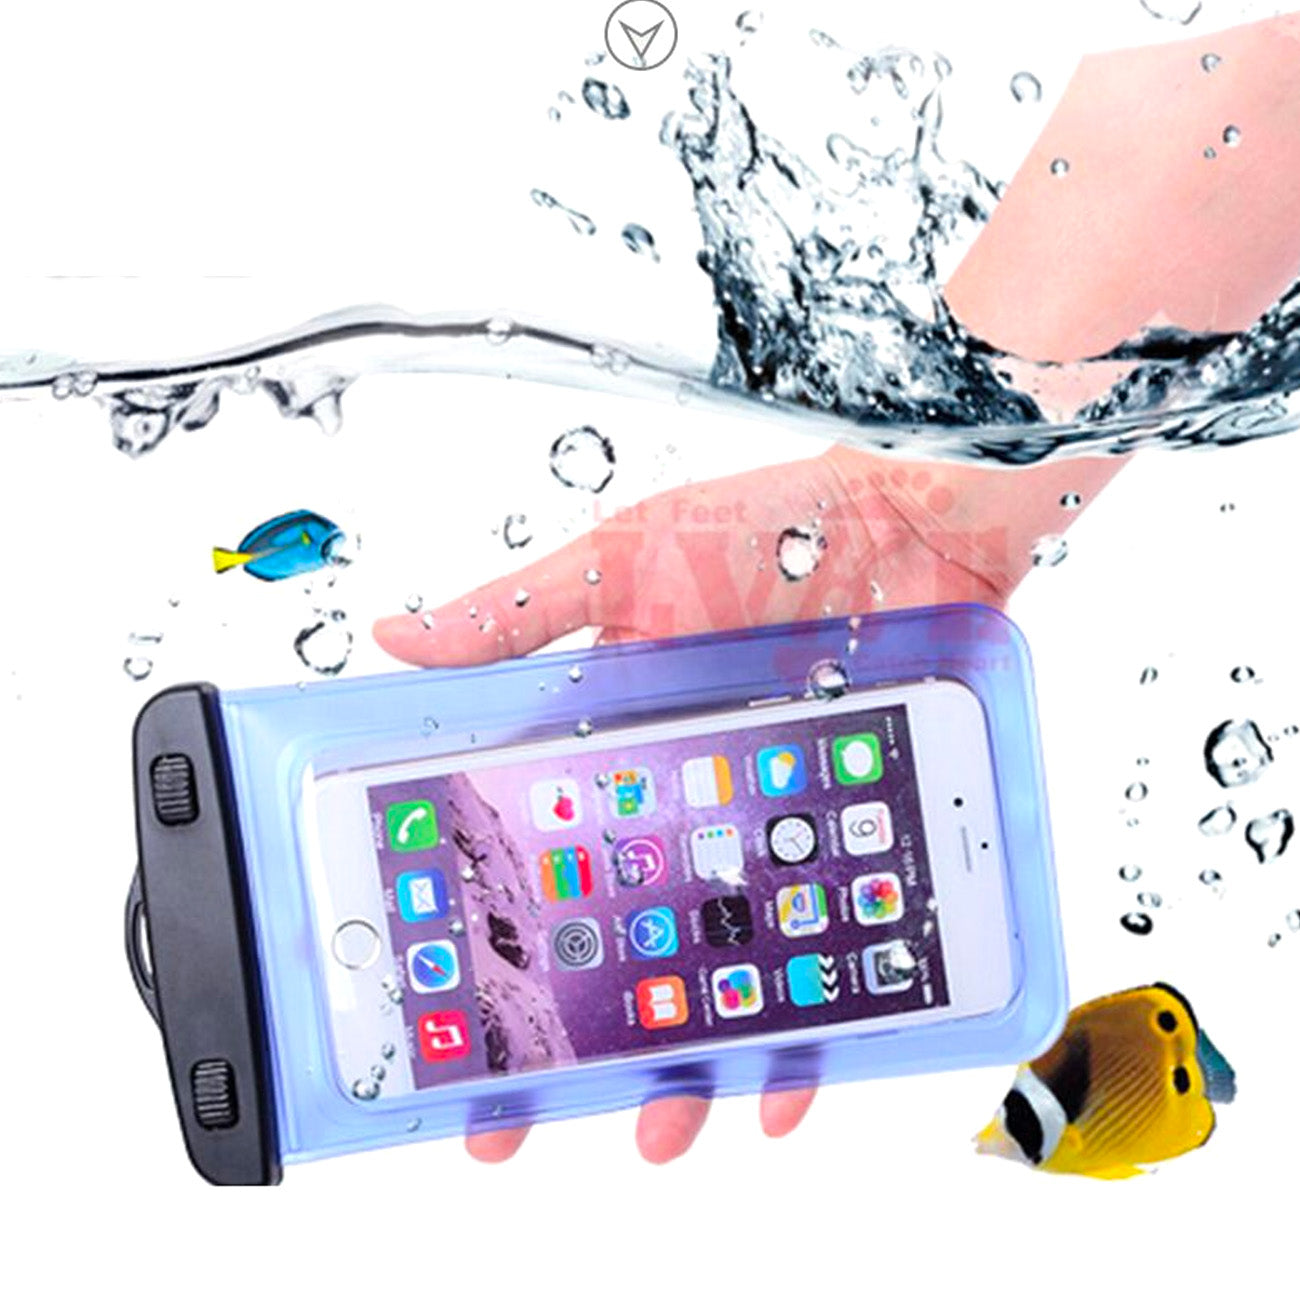 PVC waterproof armband phone case - blue